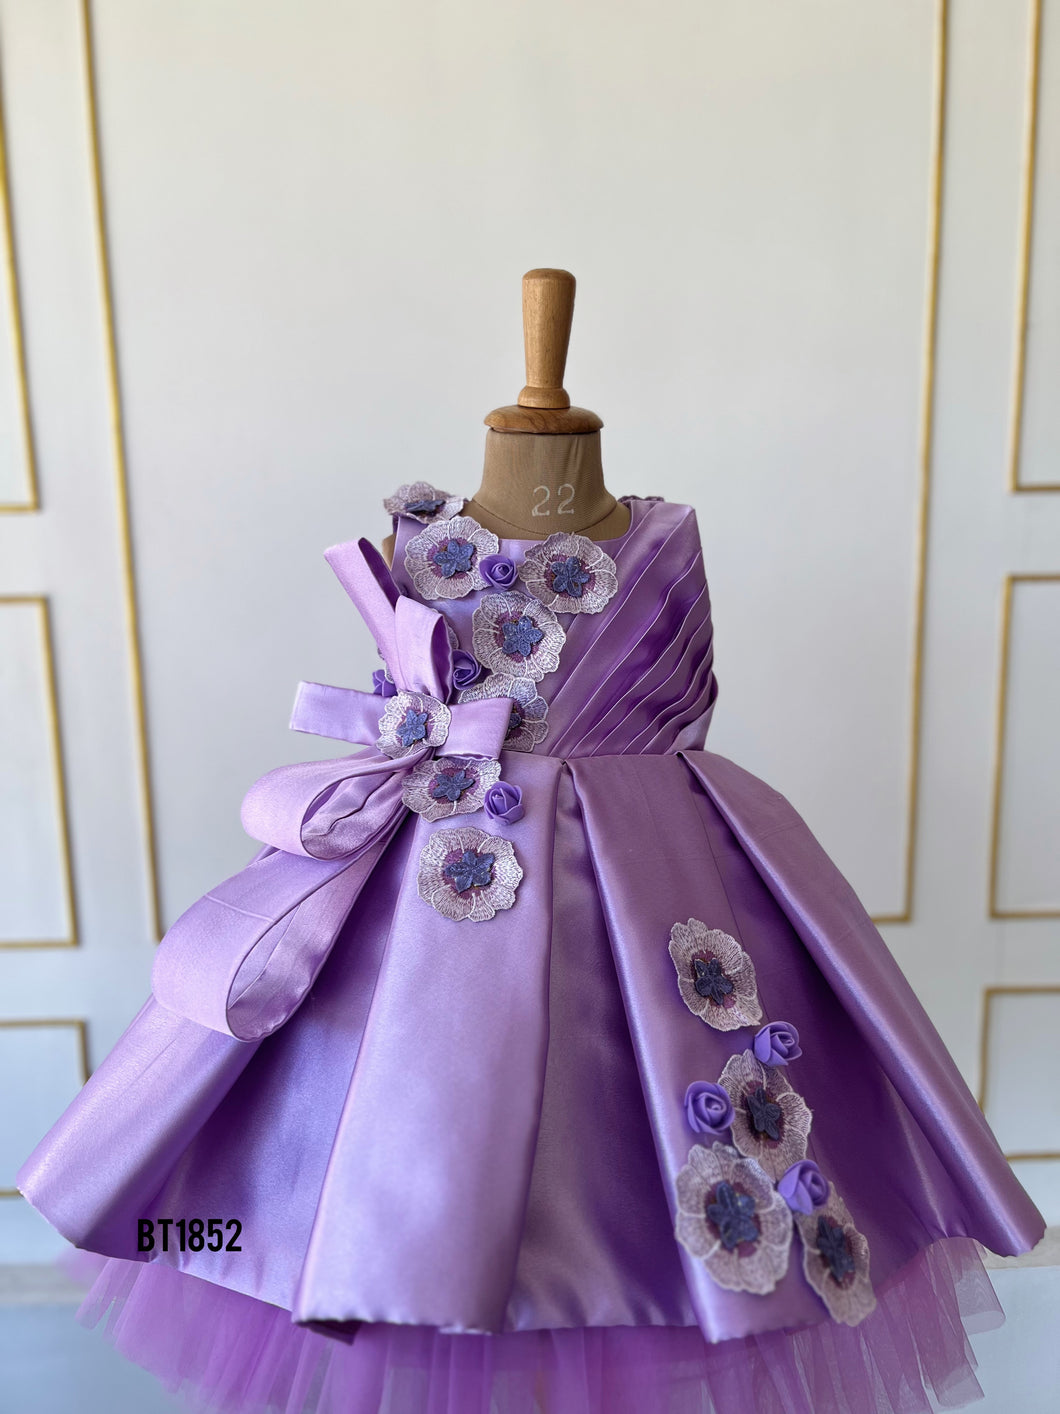 BT1852 Lavender Elegance Gown - Enchanting Whirls of Purple Splendor!